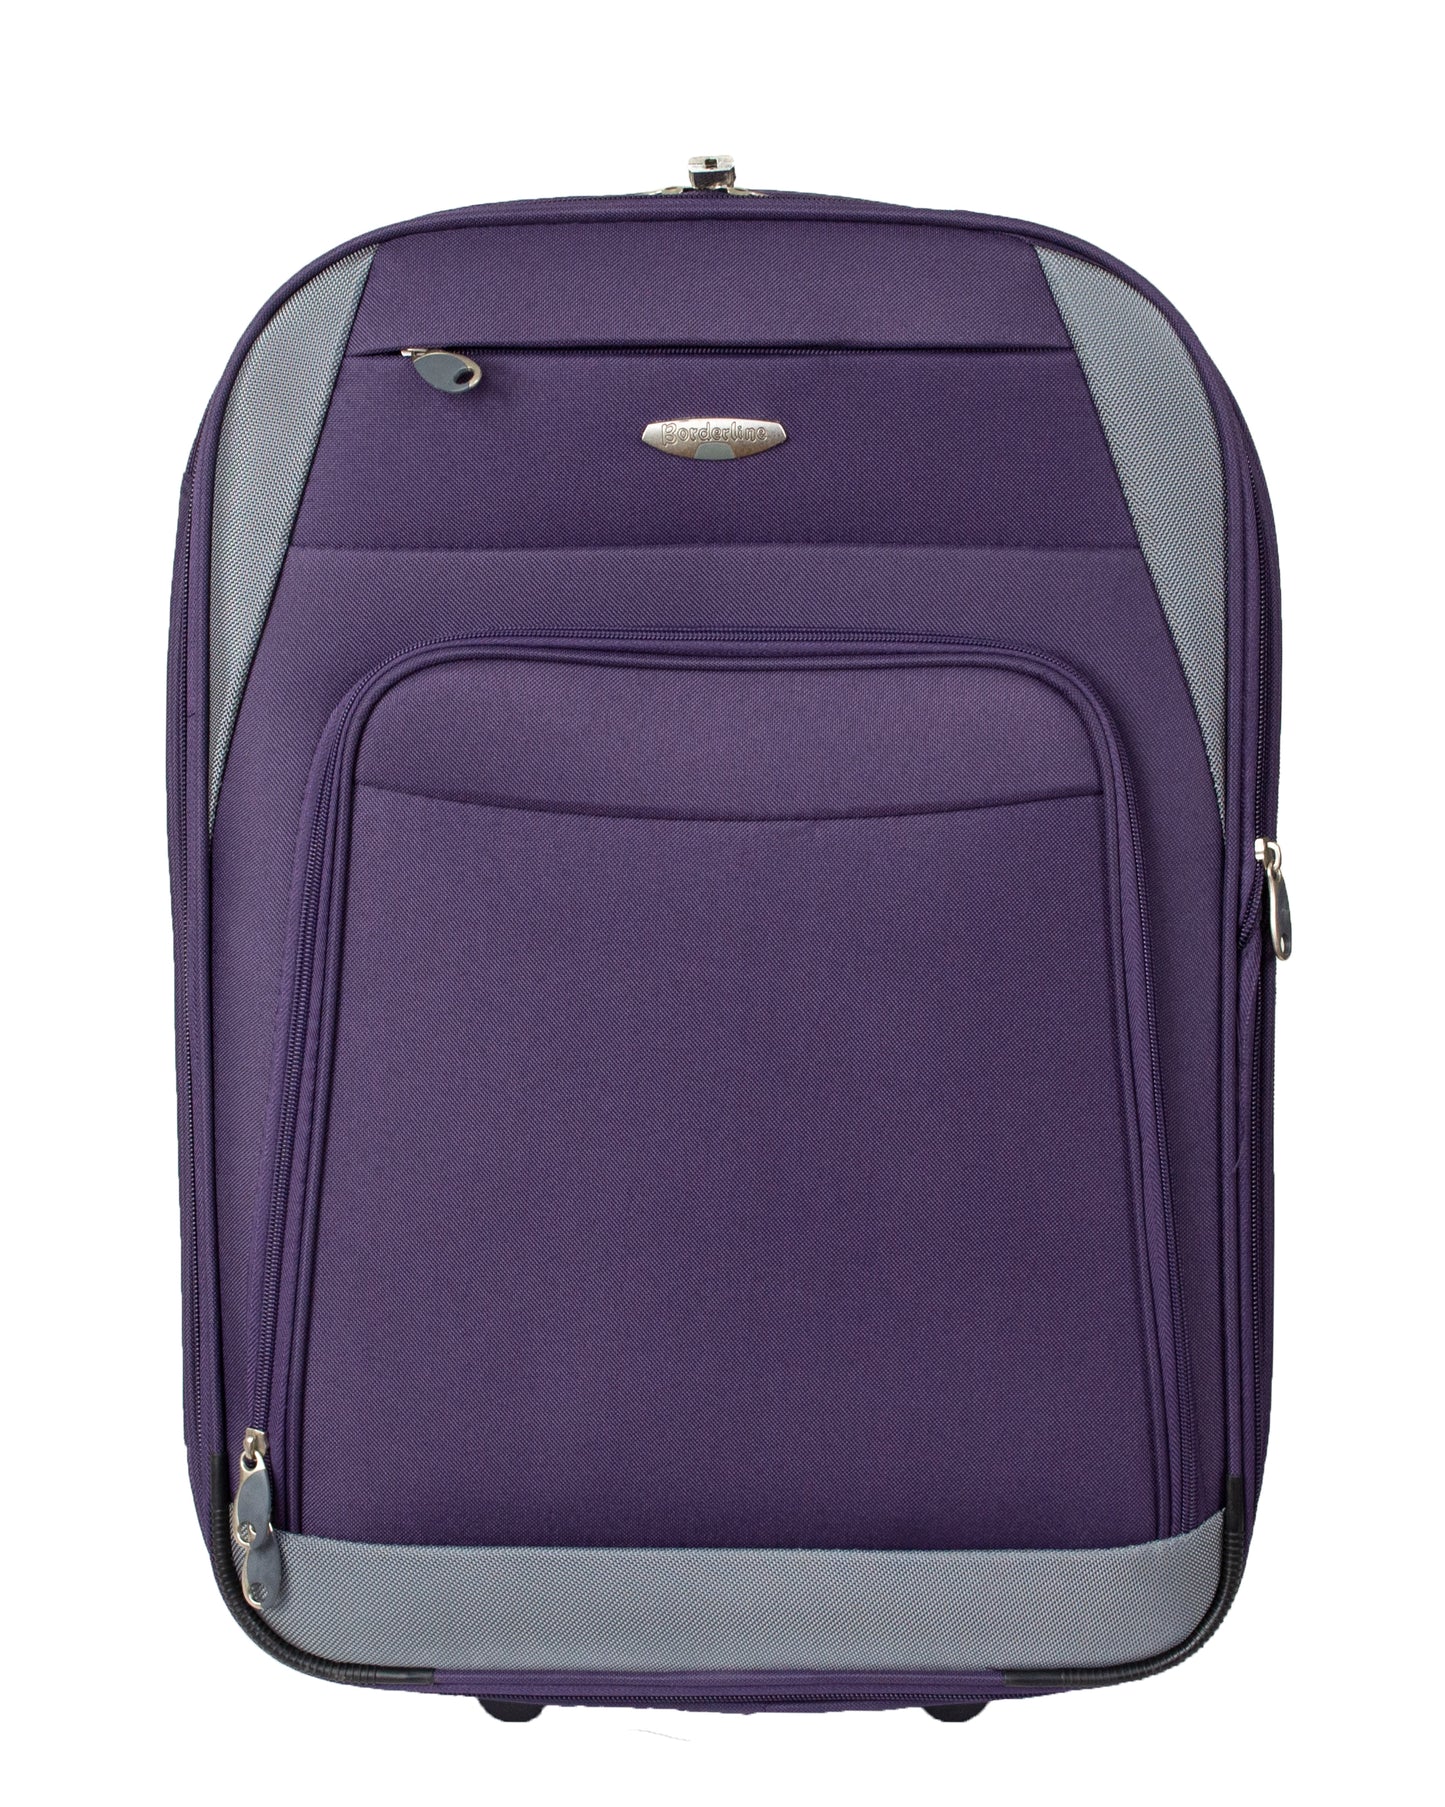 2 Wheels Soft Case Luggage Purple